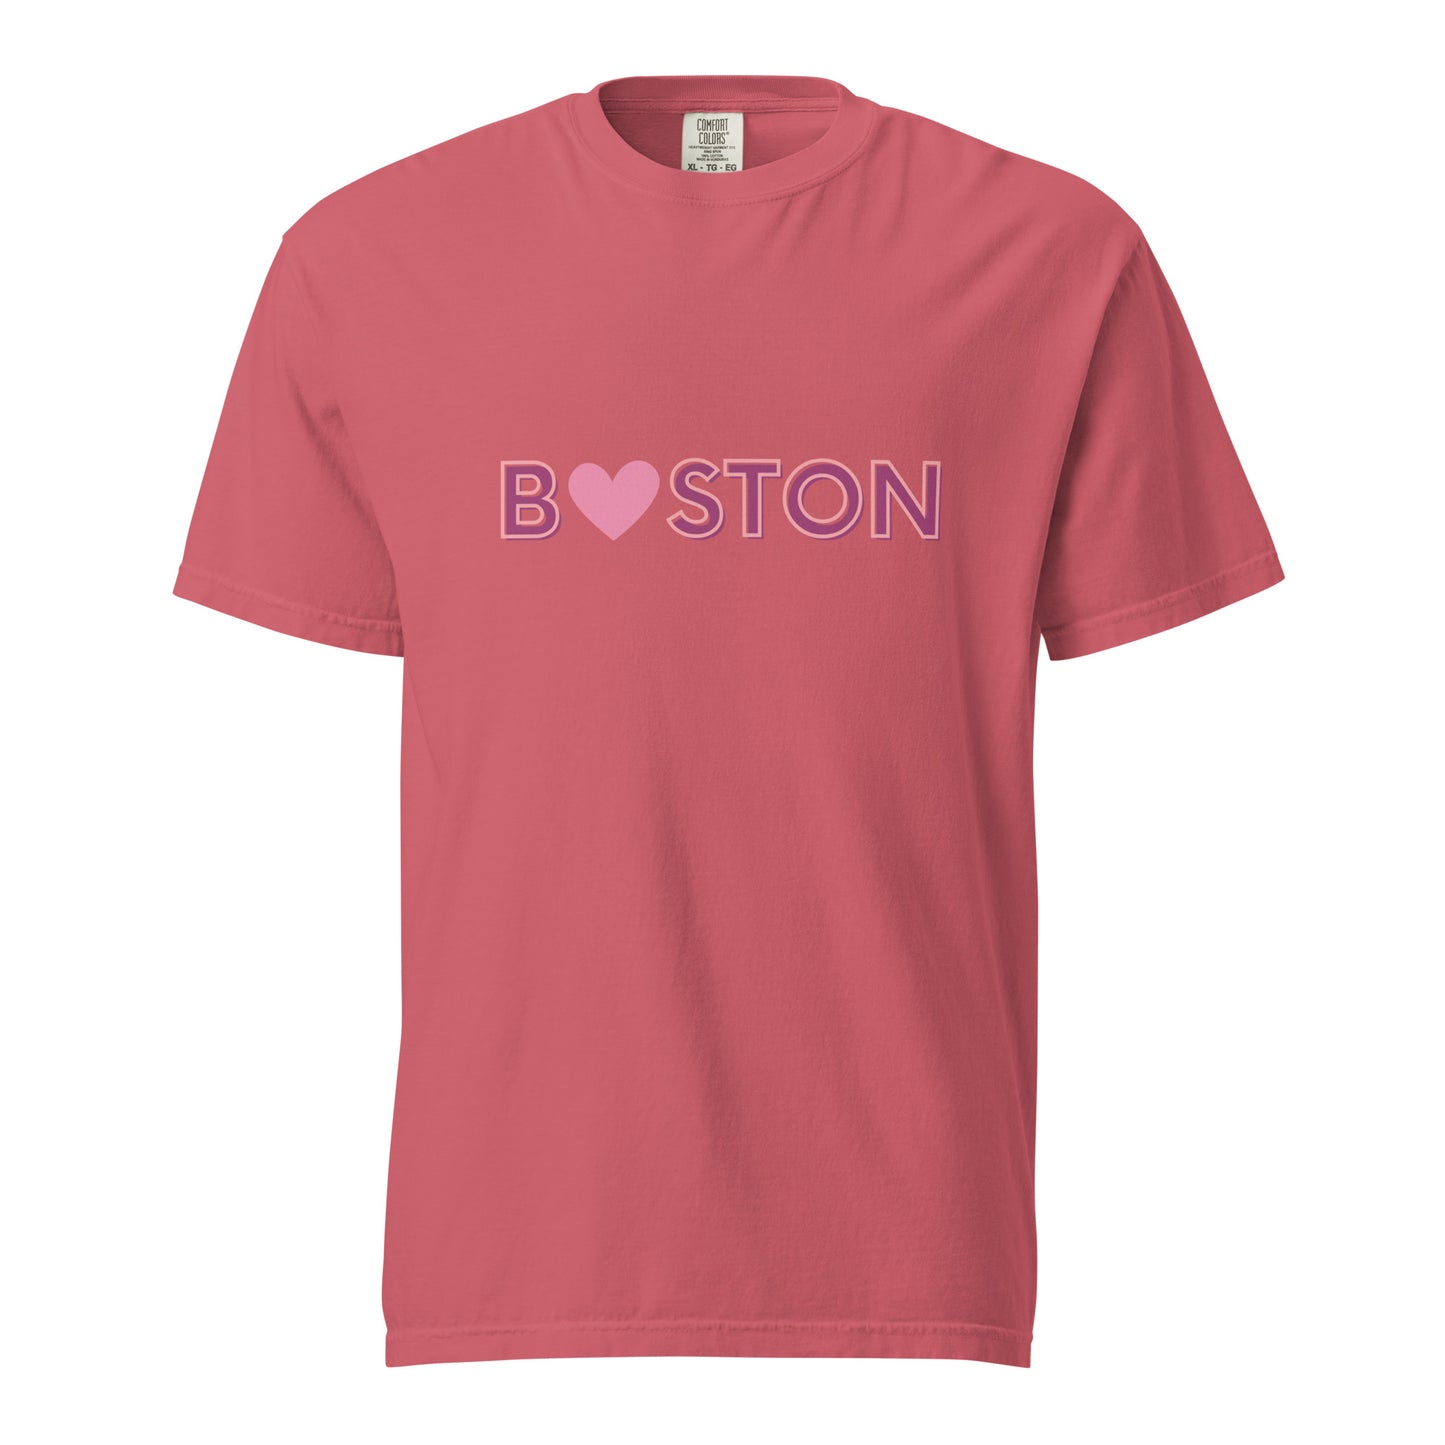 BOSTON t-shirt